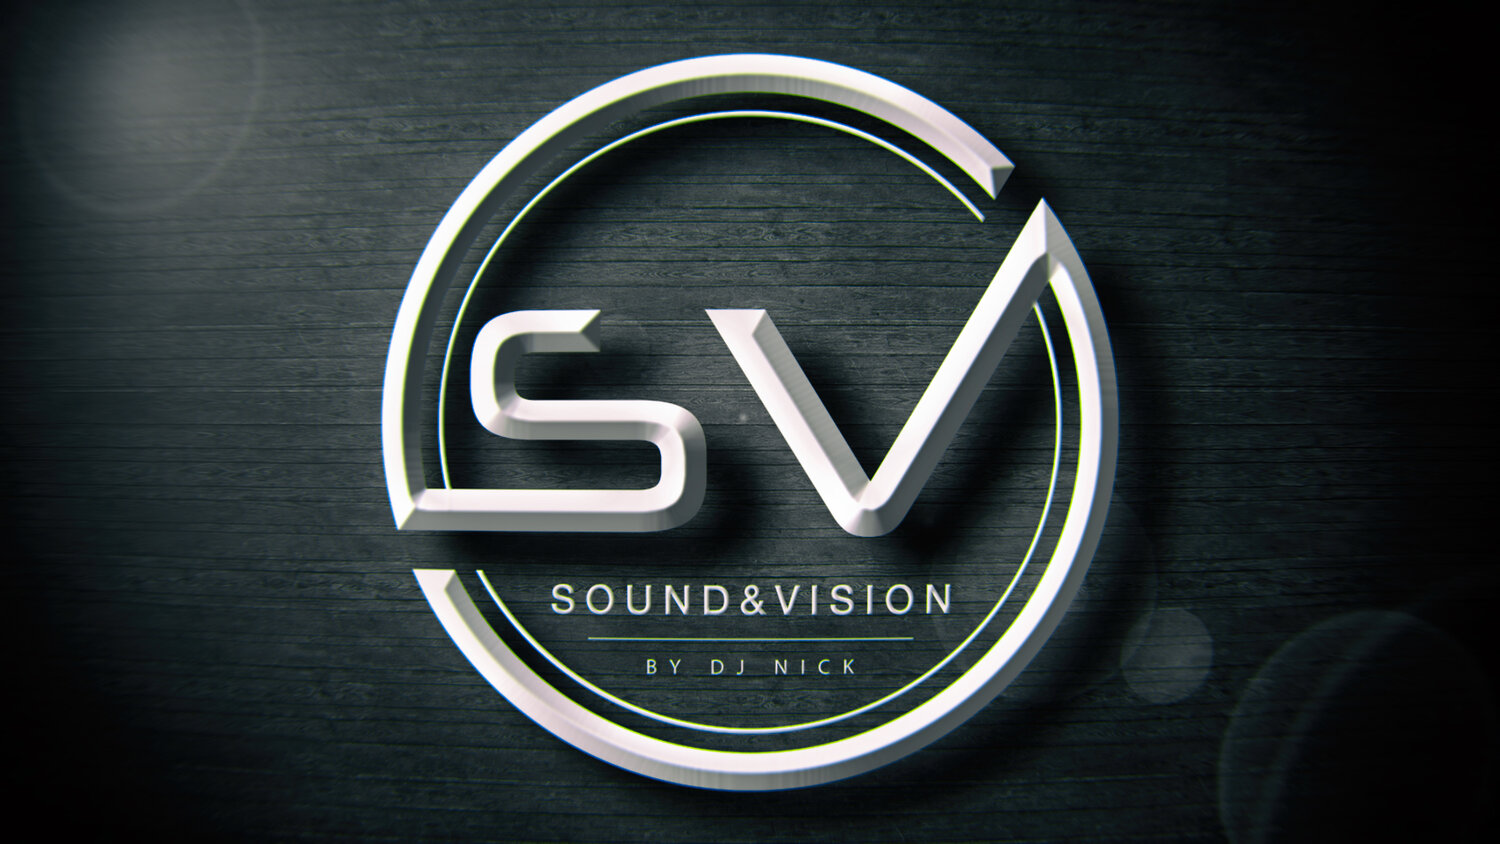 www.soundandvisionbydjnick.com